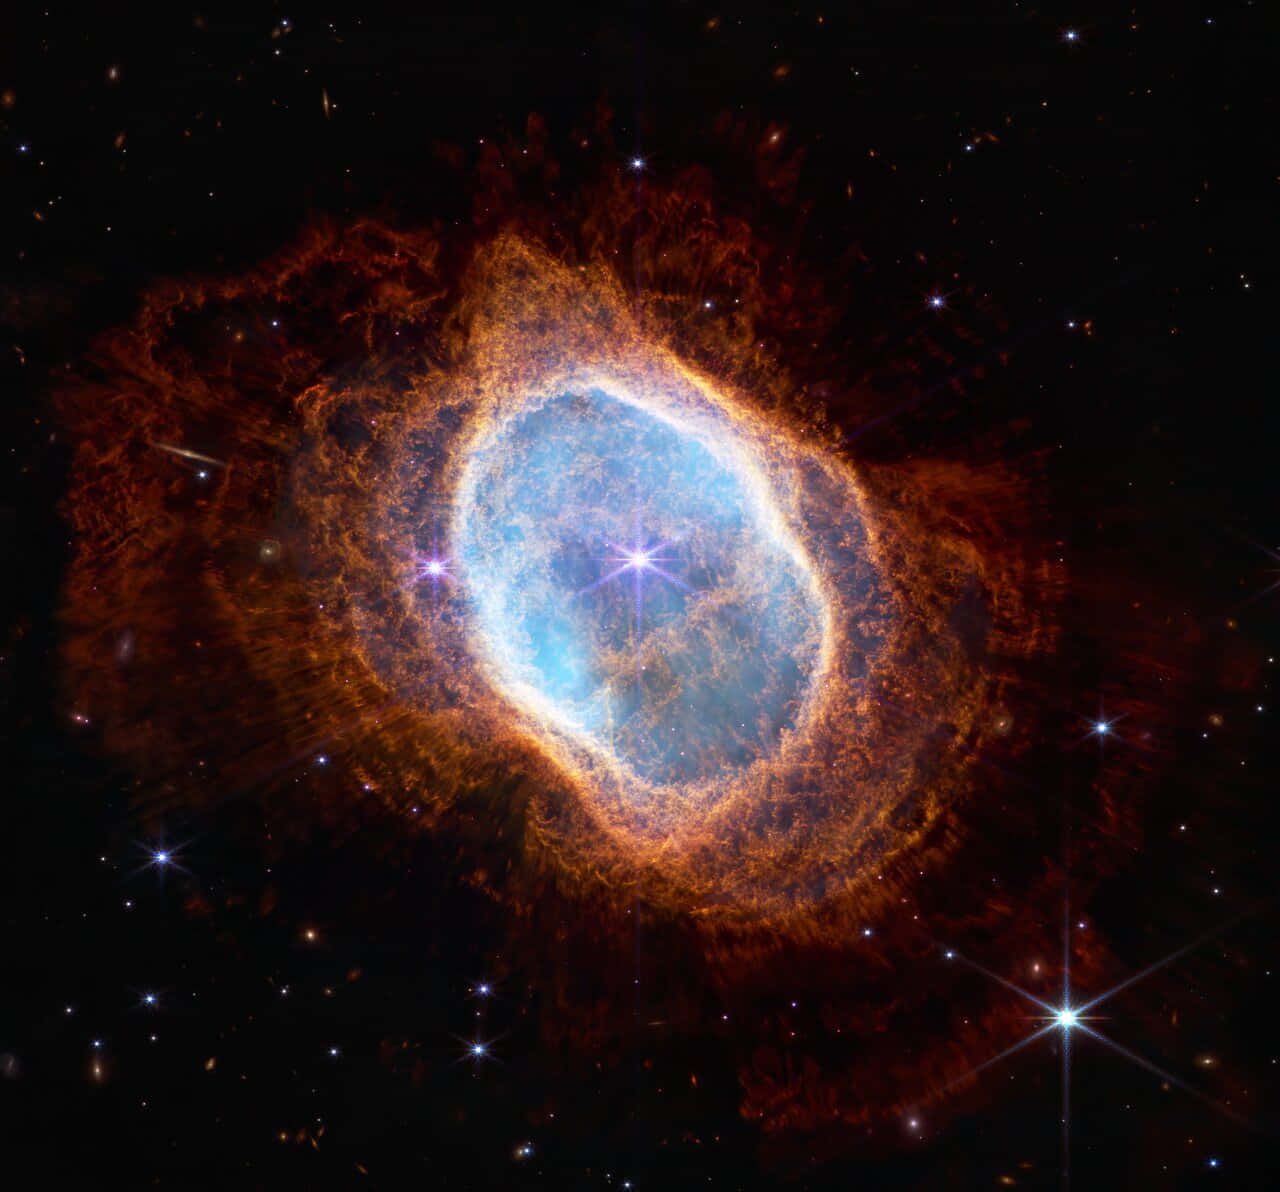 Vibrant Colors Amidst the Glowing Nebula